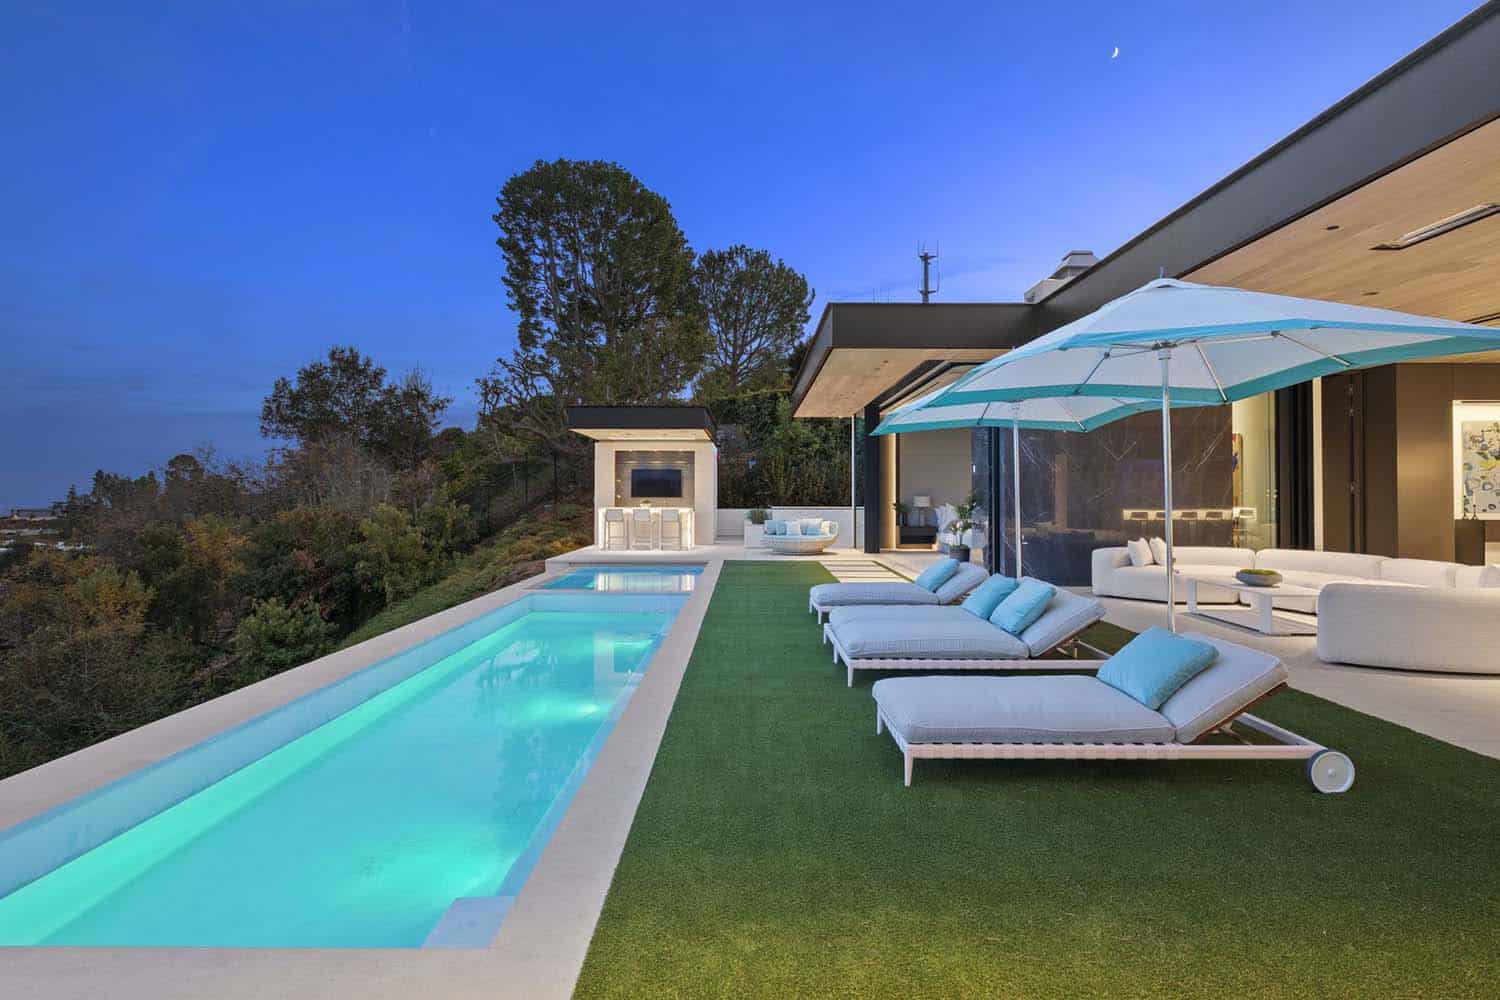 modern backyard swimming pool